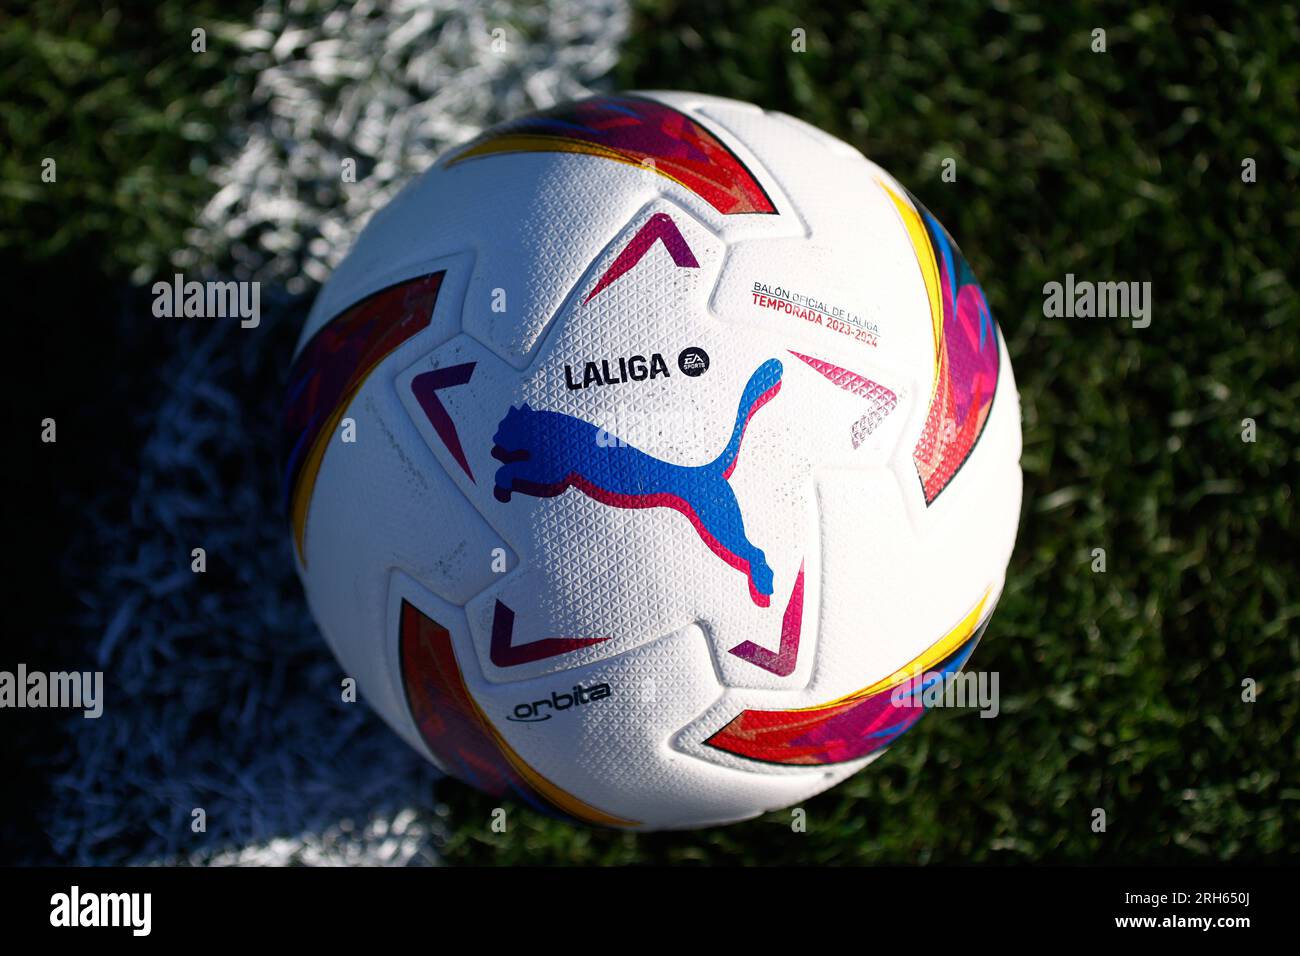 unboxing Balon la liga easport Puma orbita 2023-24 / puma ball la liga 